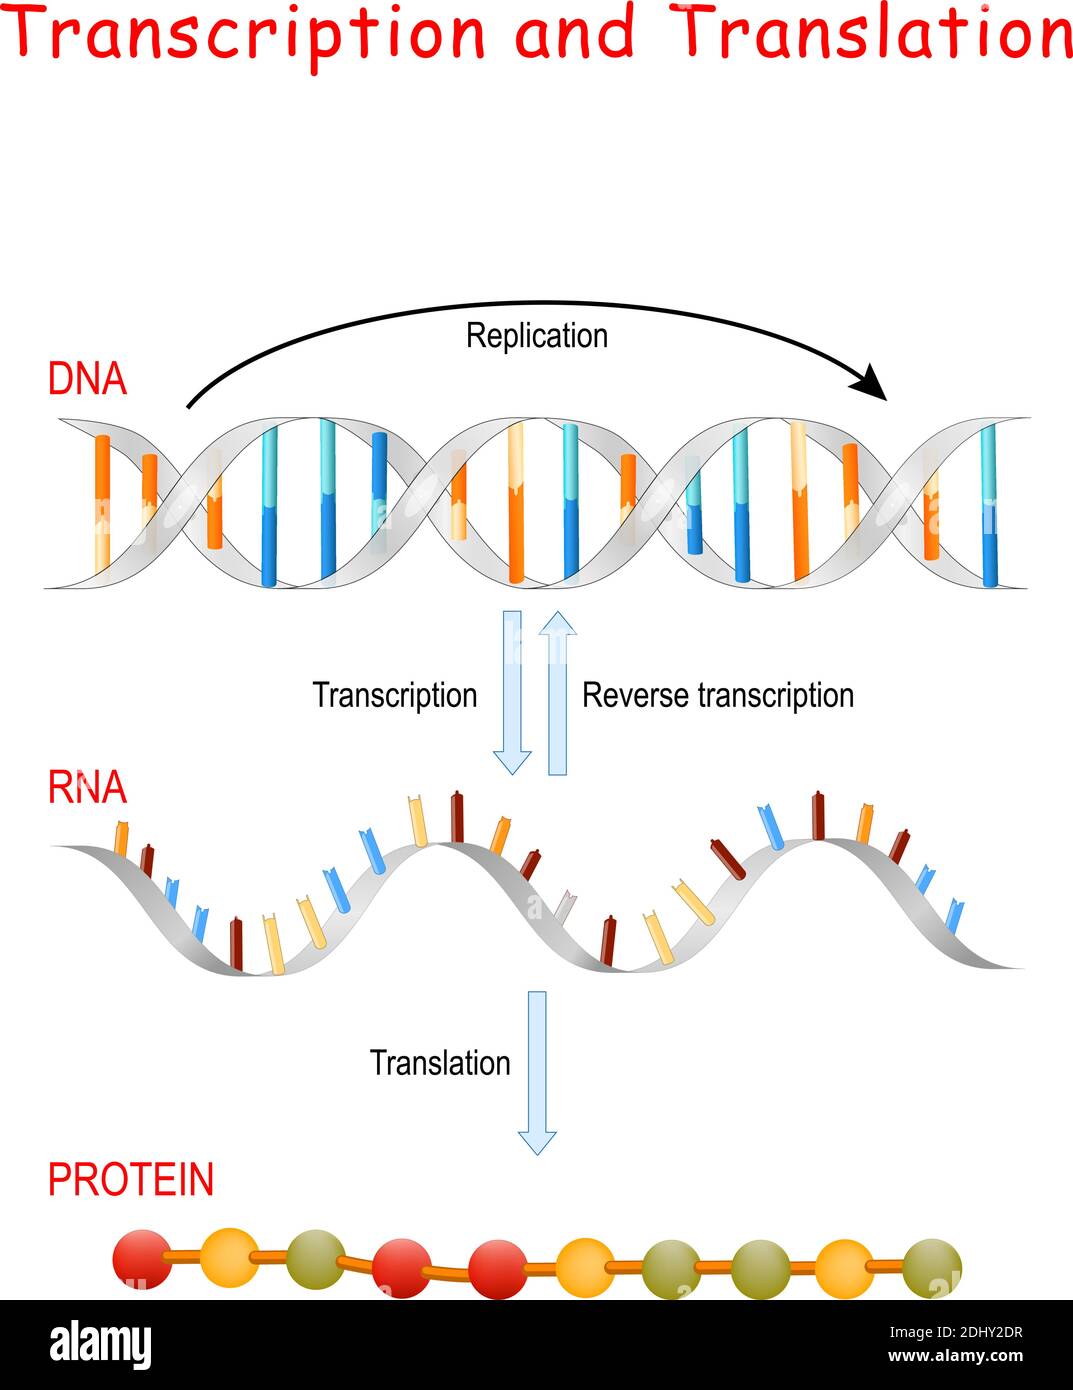 dna replication transcription and translation